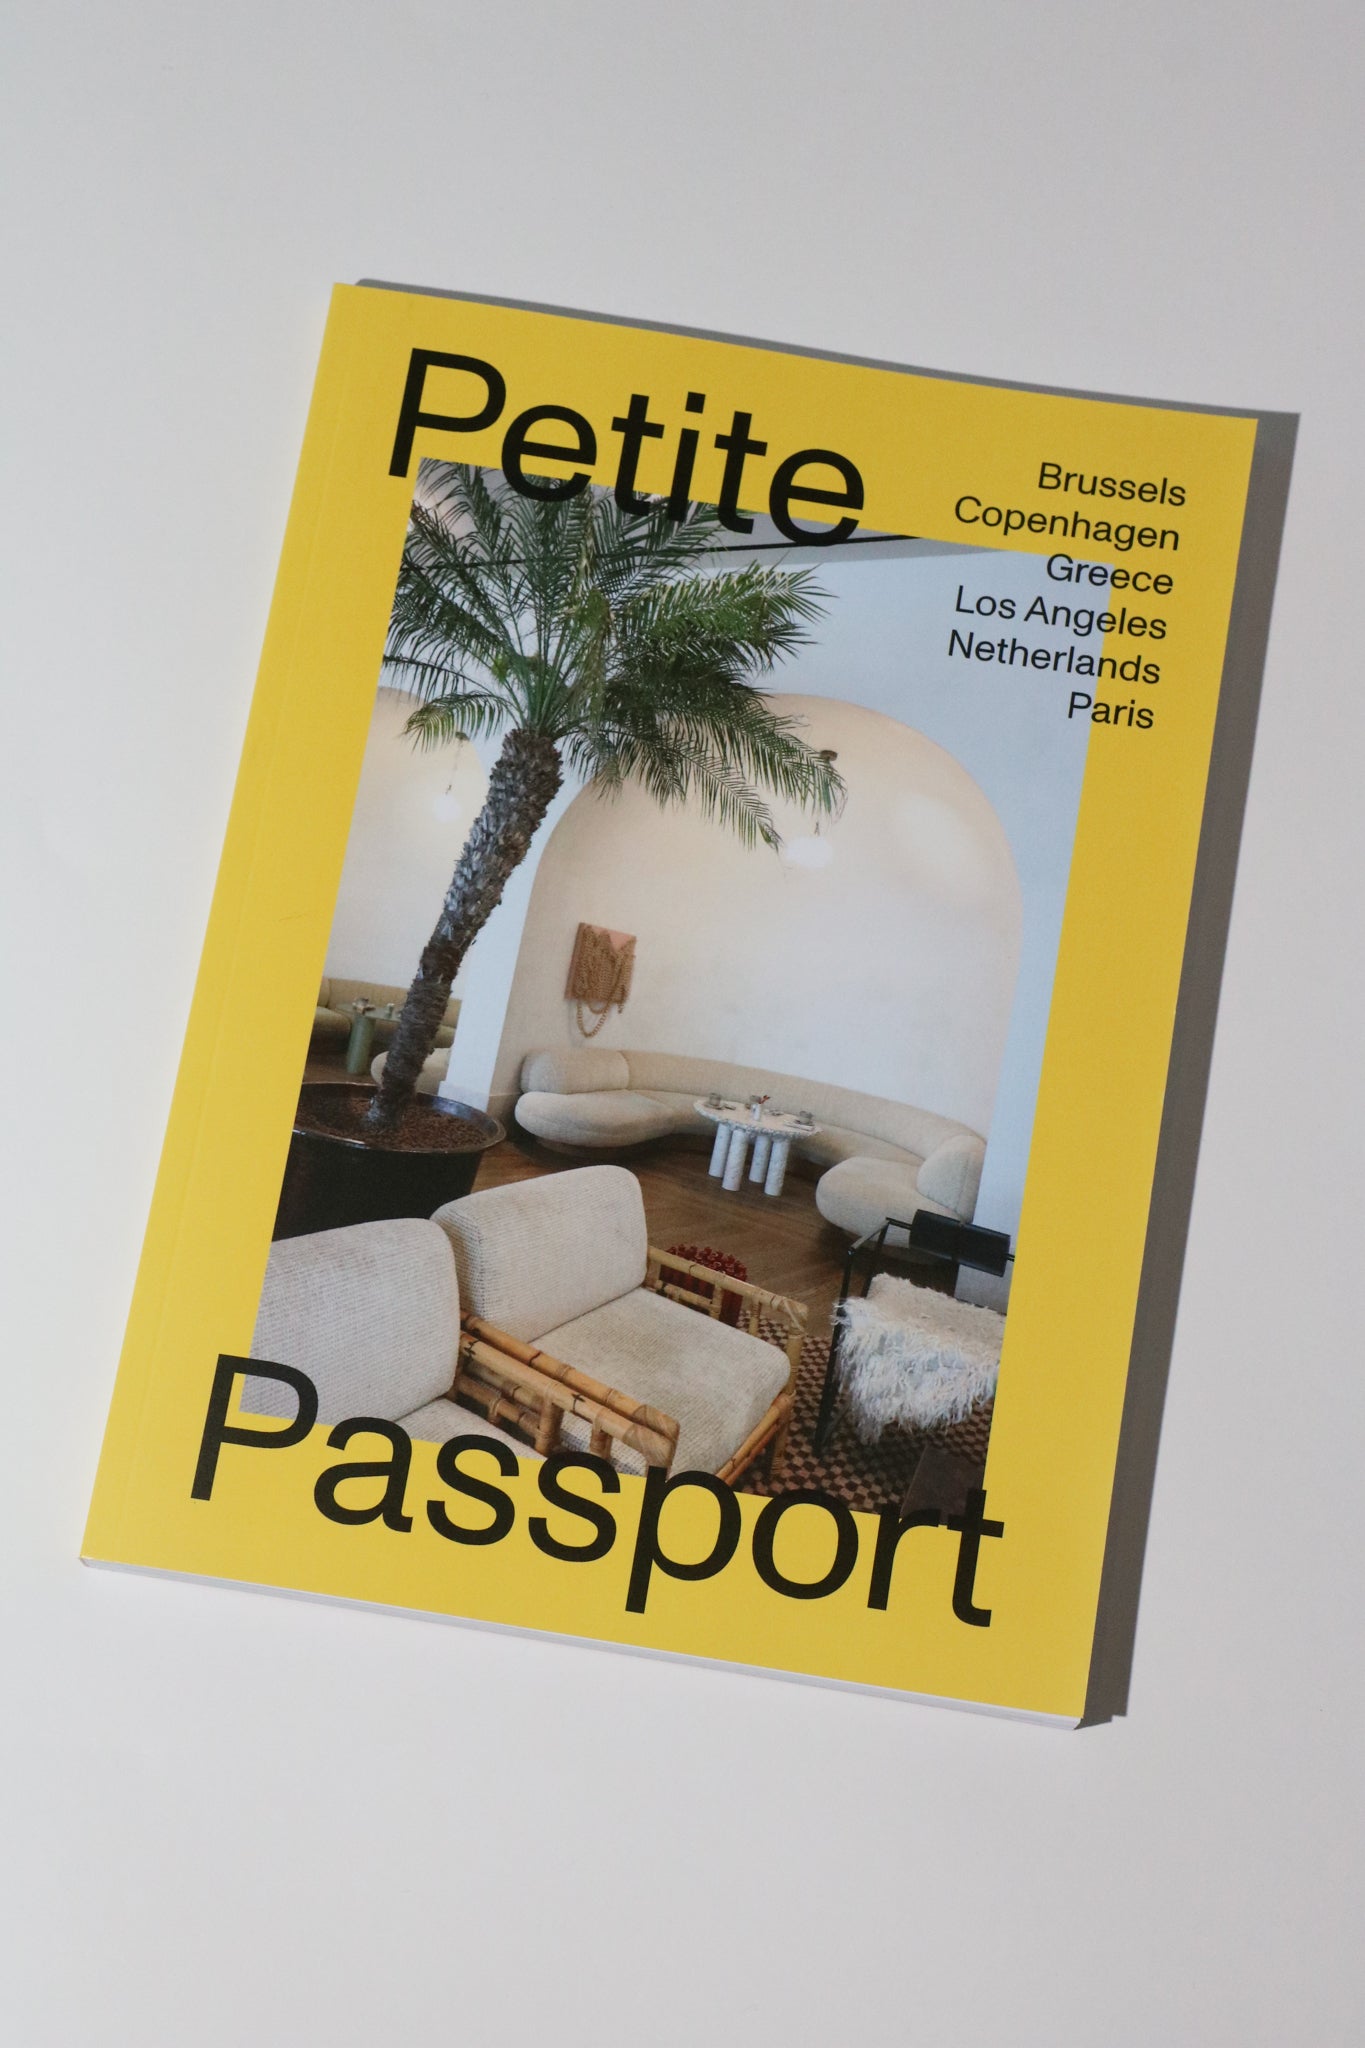 Petite Passport